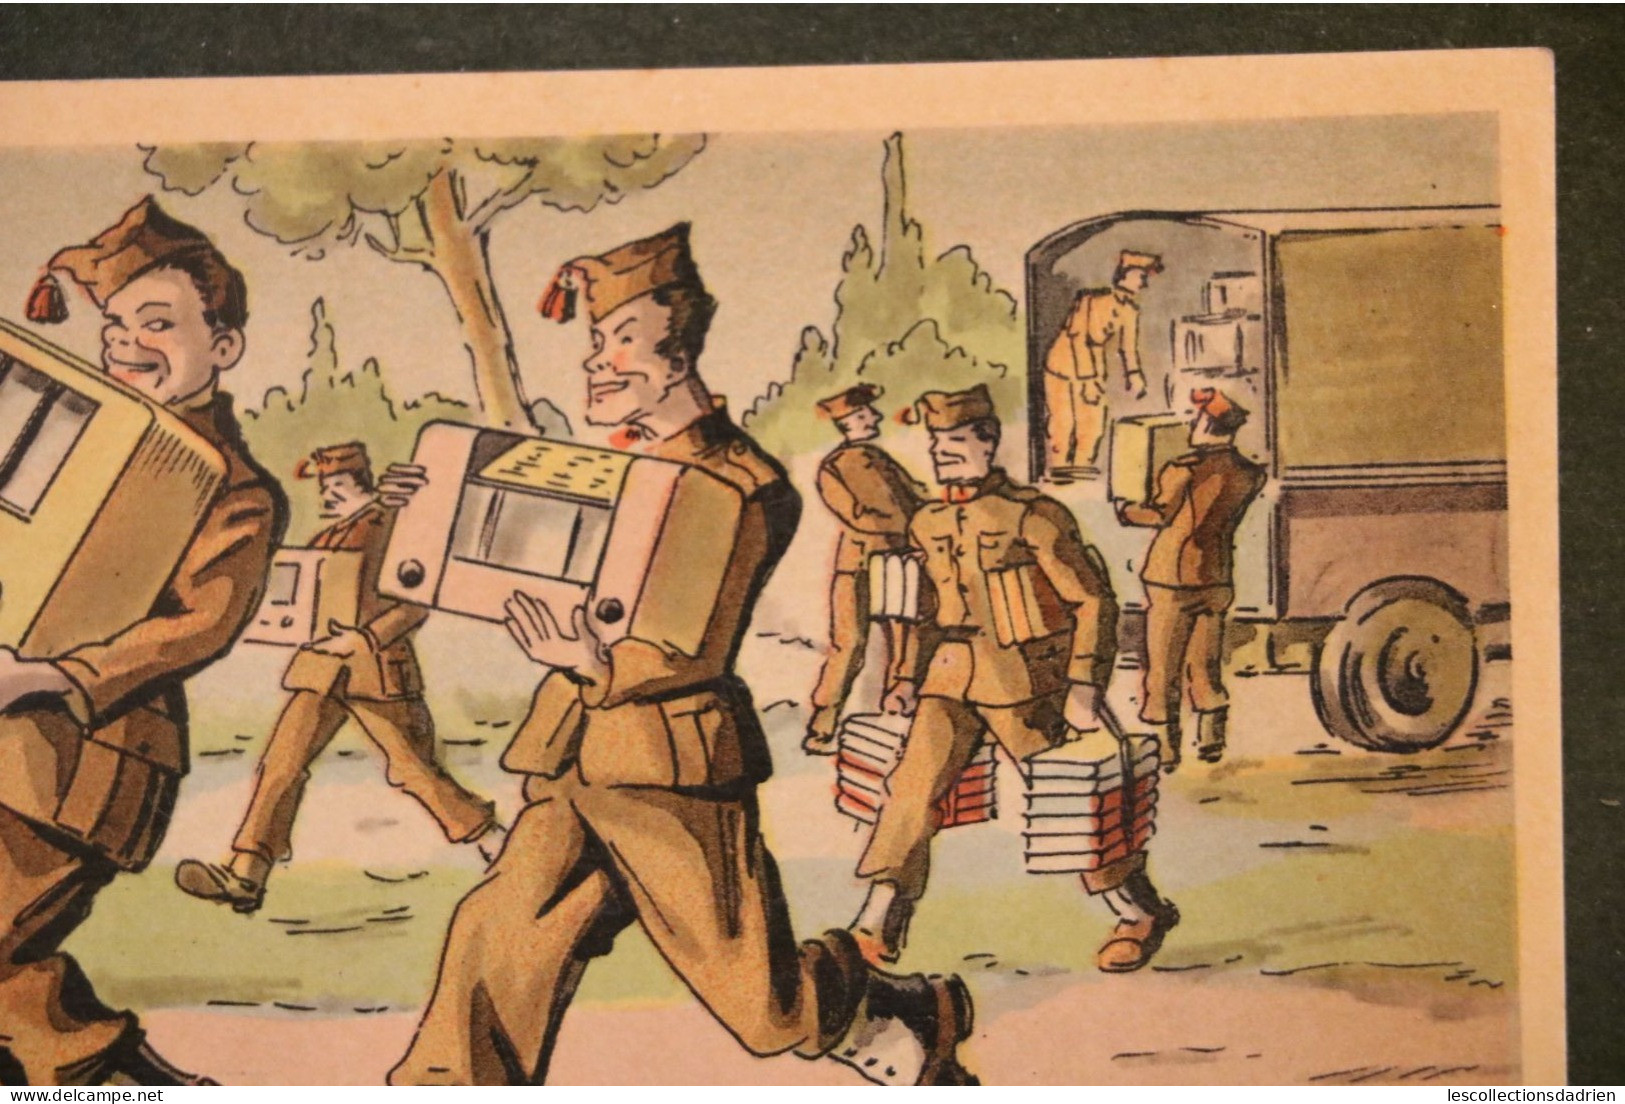 Carte Postale Humorisitque Militaires Soldats Radio Livres Soldaten  H.d B 359 - Humour